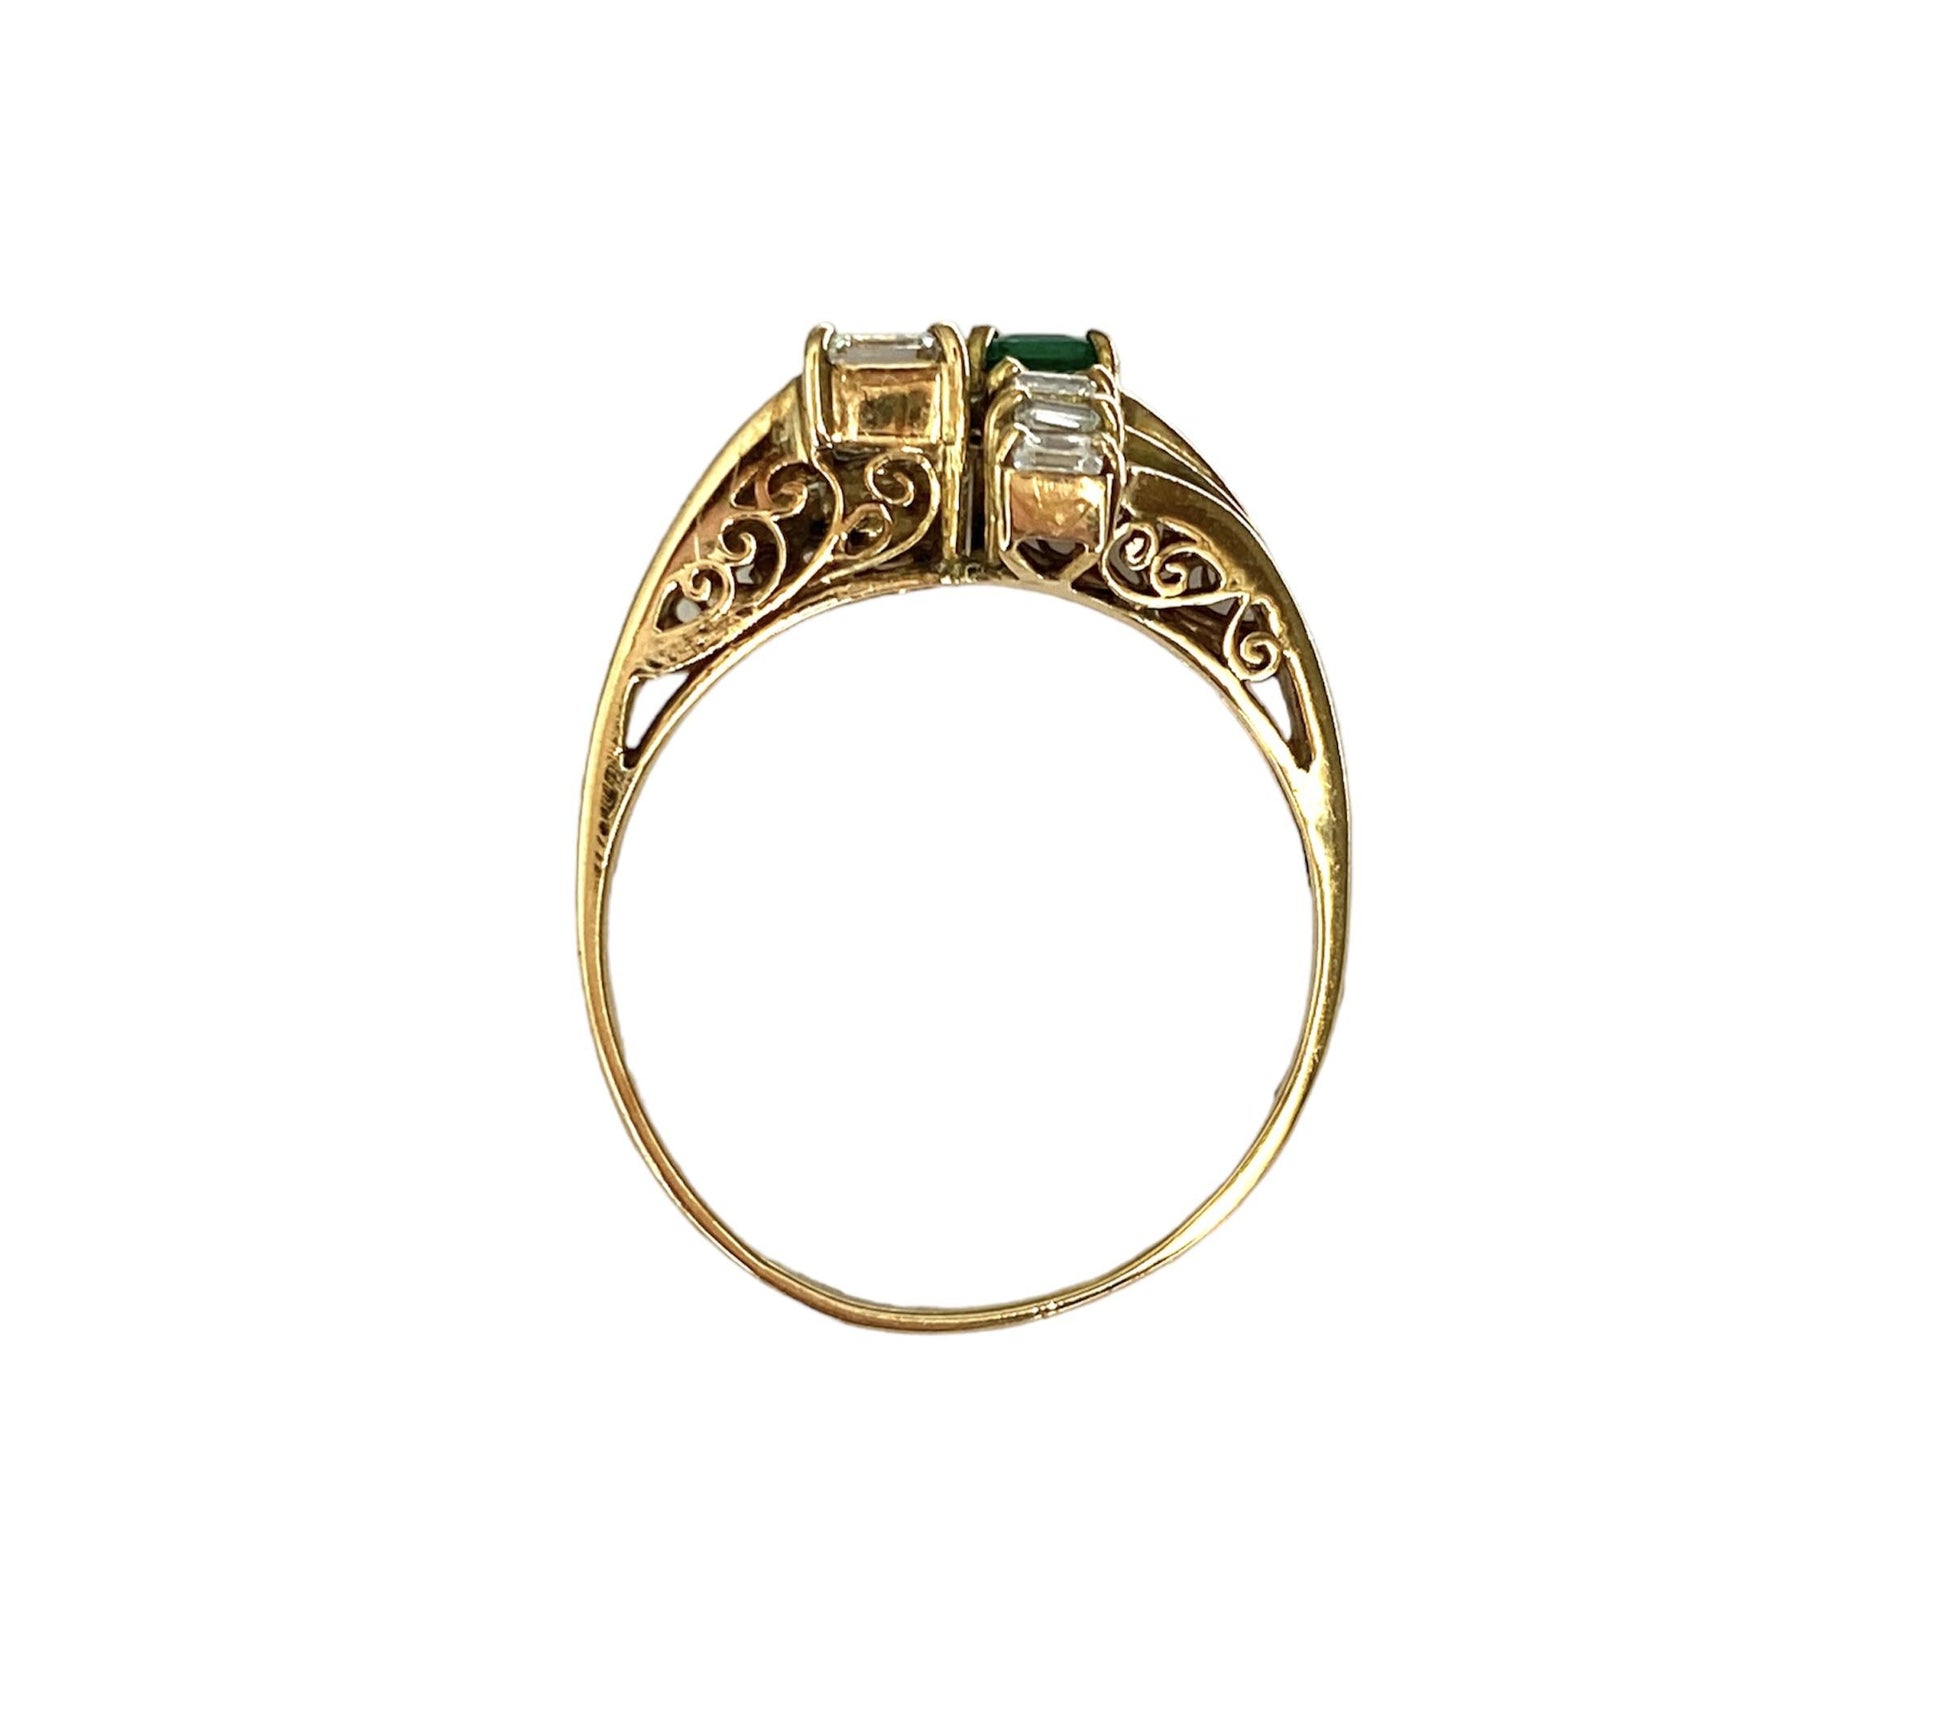 0.39ct Emerald & Diamond Ring 18K Yellow Gold 3.13G 7US